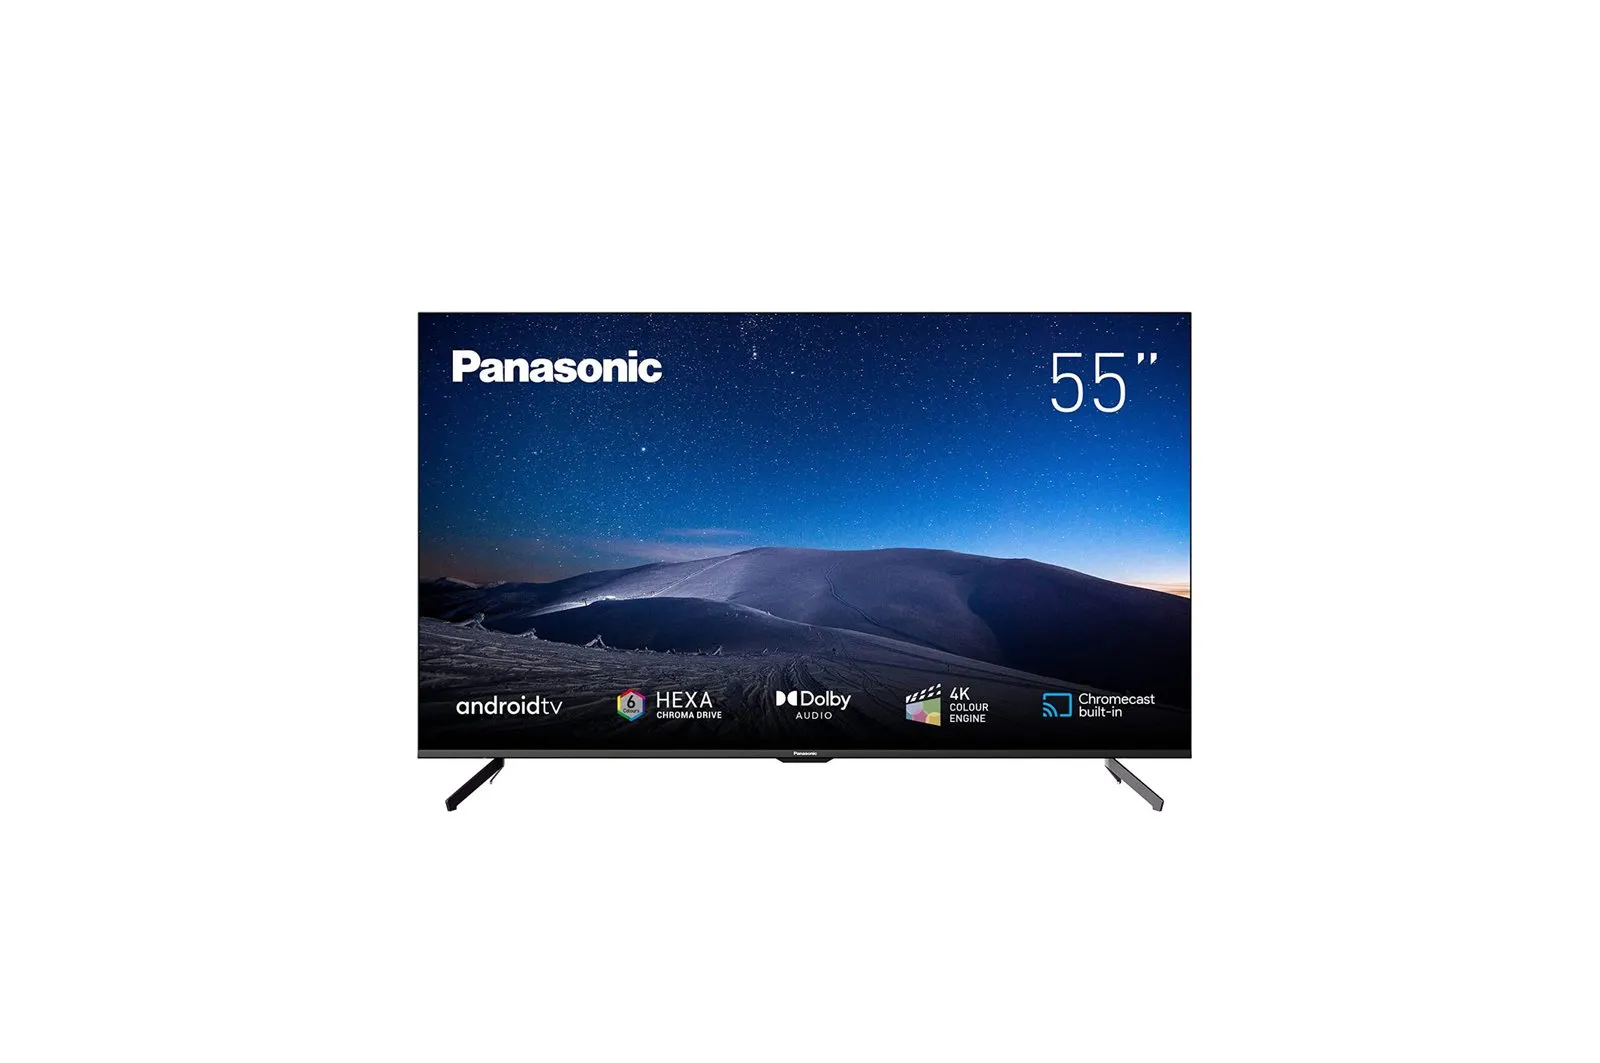 Panasonic 55 Inch Android Smart TV Black Model TH-55HX750M | 1 Year Warranty